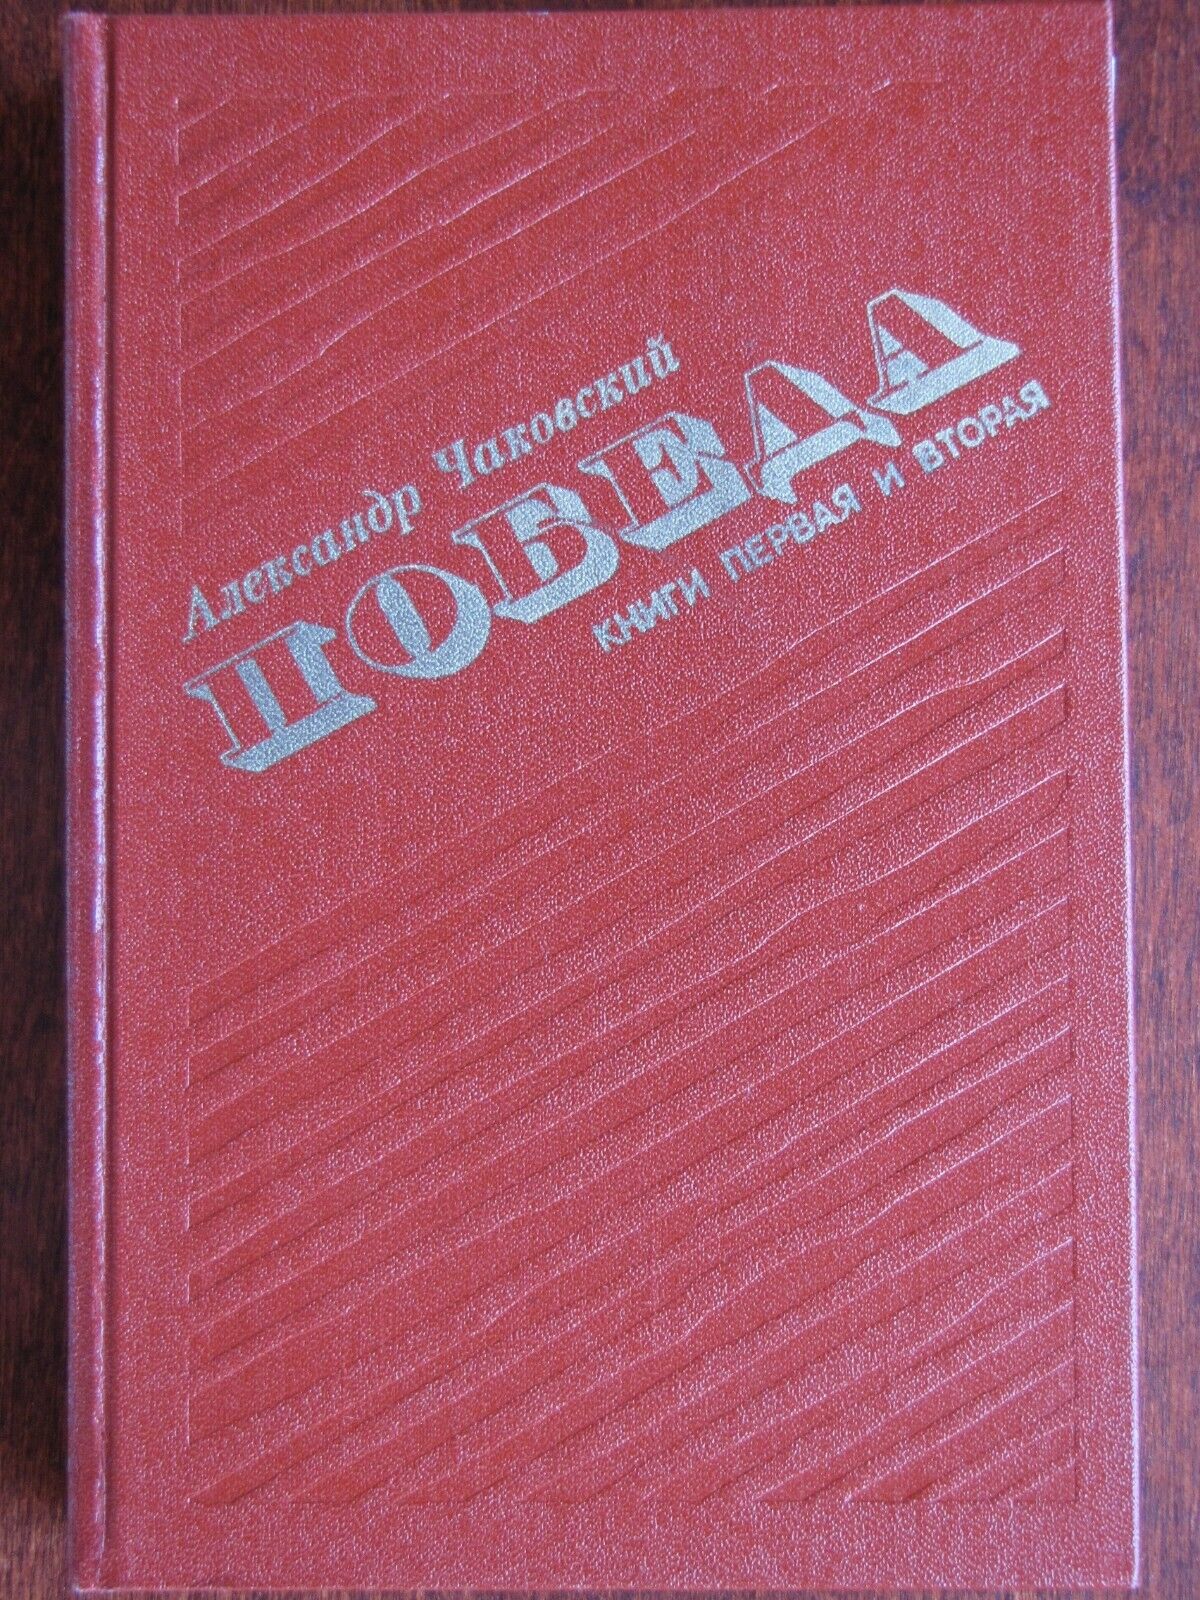 1988 VICTORY Novel in 2 Vols by A.Chakovsky ~ ПОБЕДА. А.Чаковский ~ Soviet Book Без бренда - фотография #12